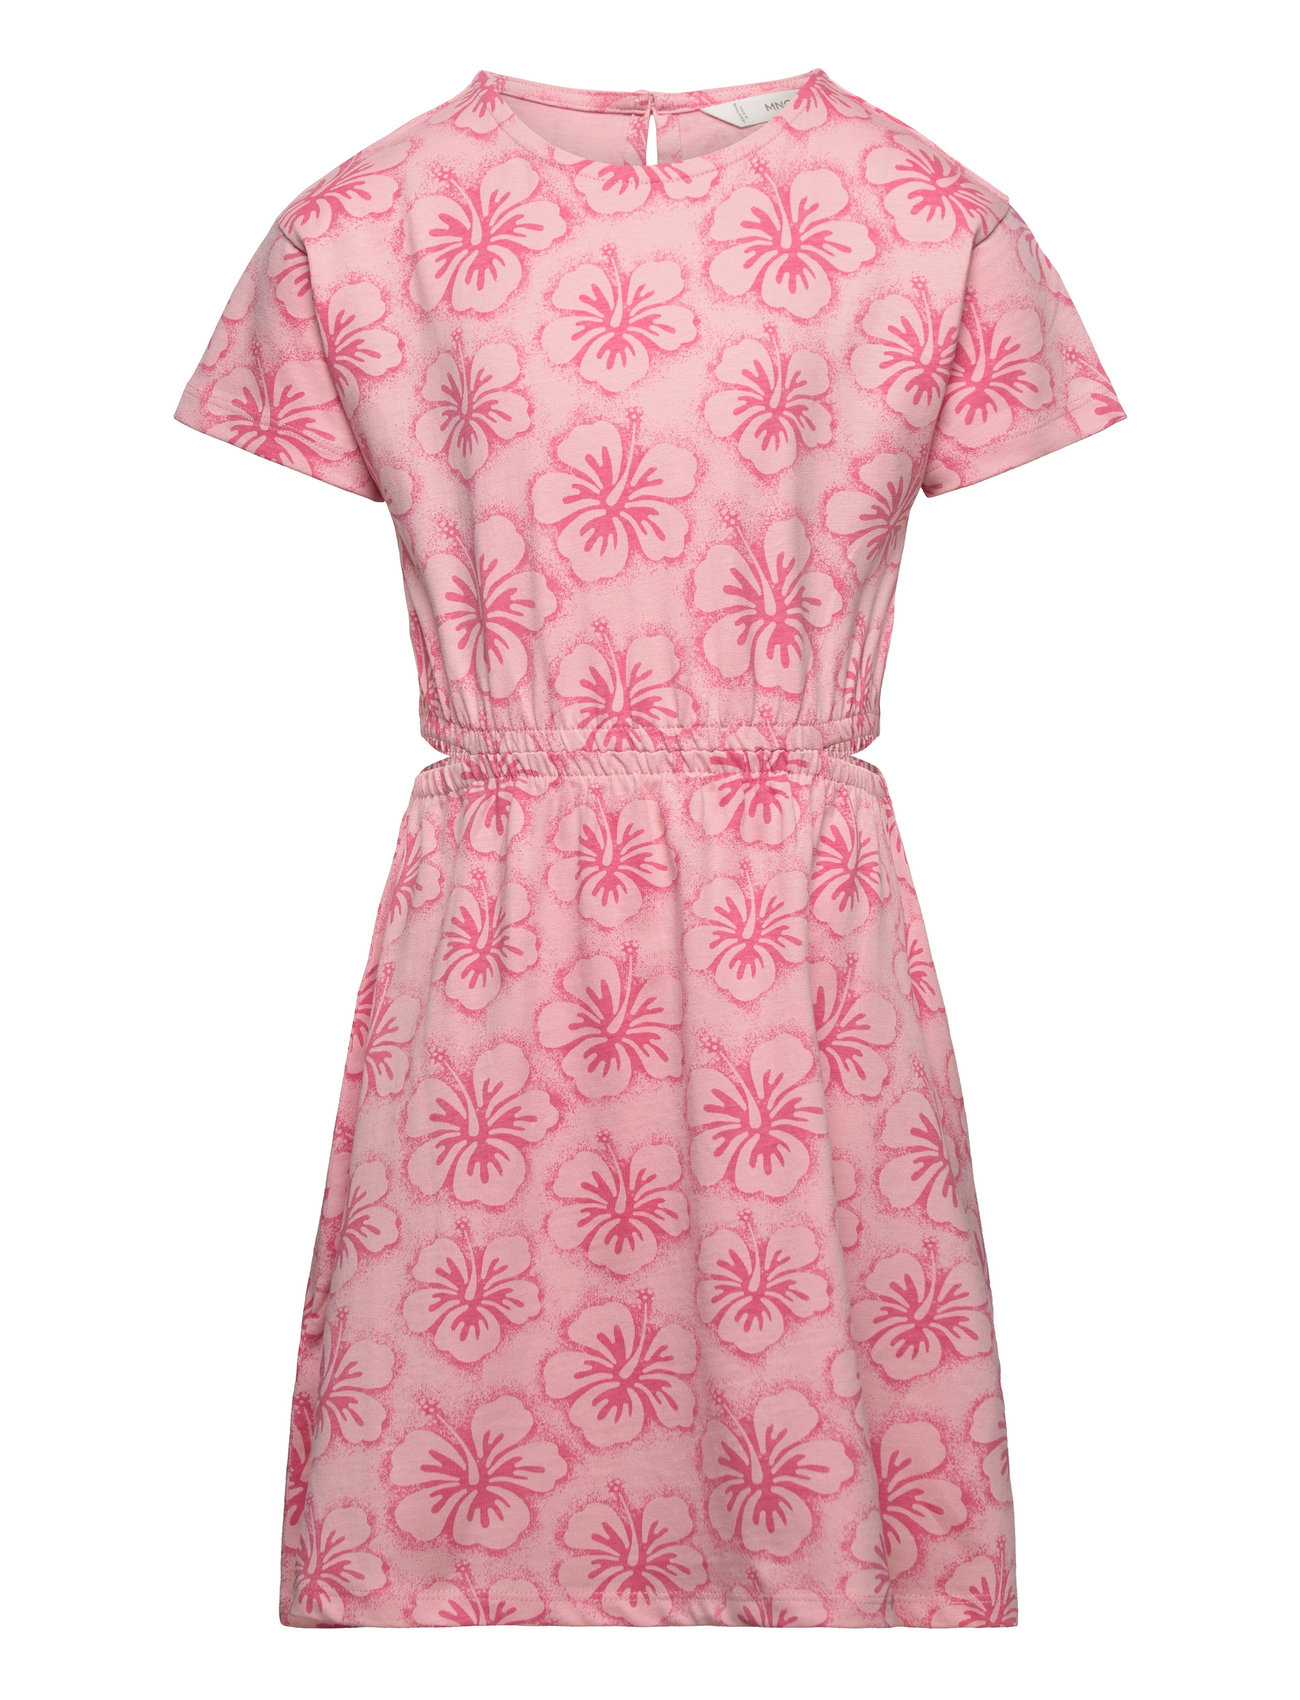 Printed Cut-Out Detail Dress Dresses & Skirts Dresses Casual Dresses Short-sleeved Casual Dresses Pink Mango